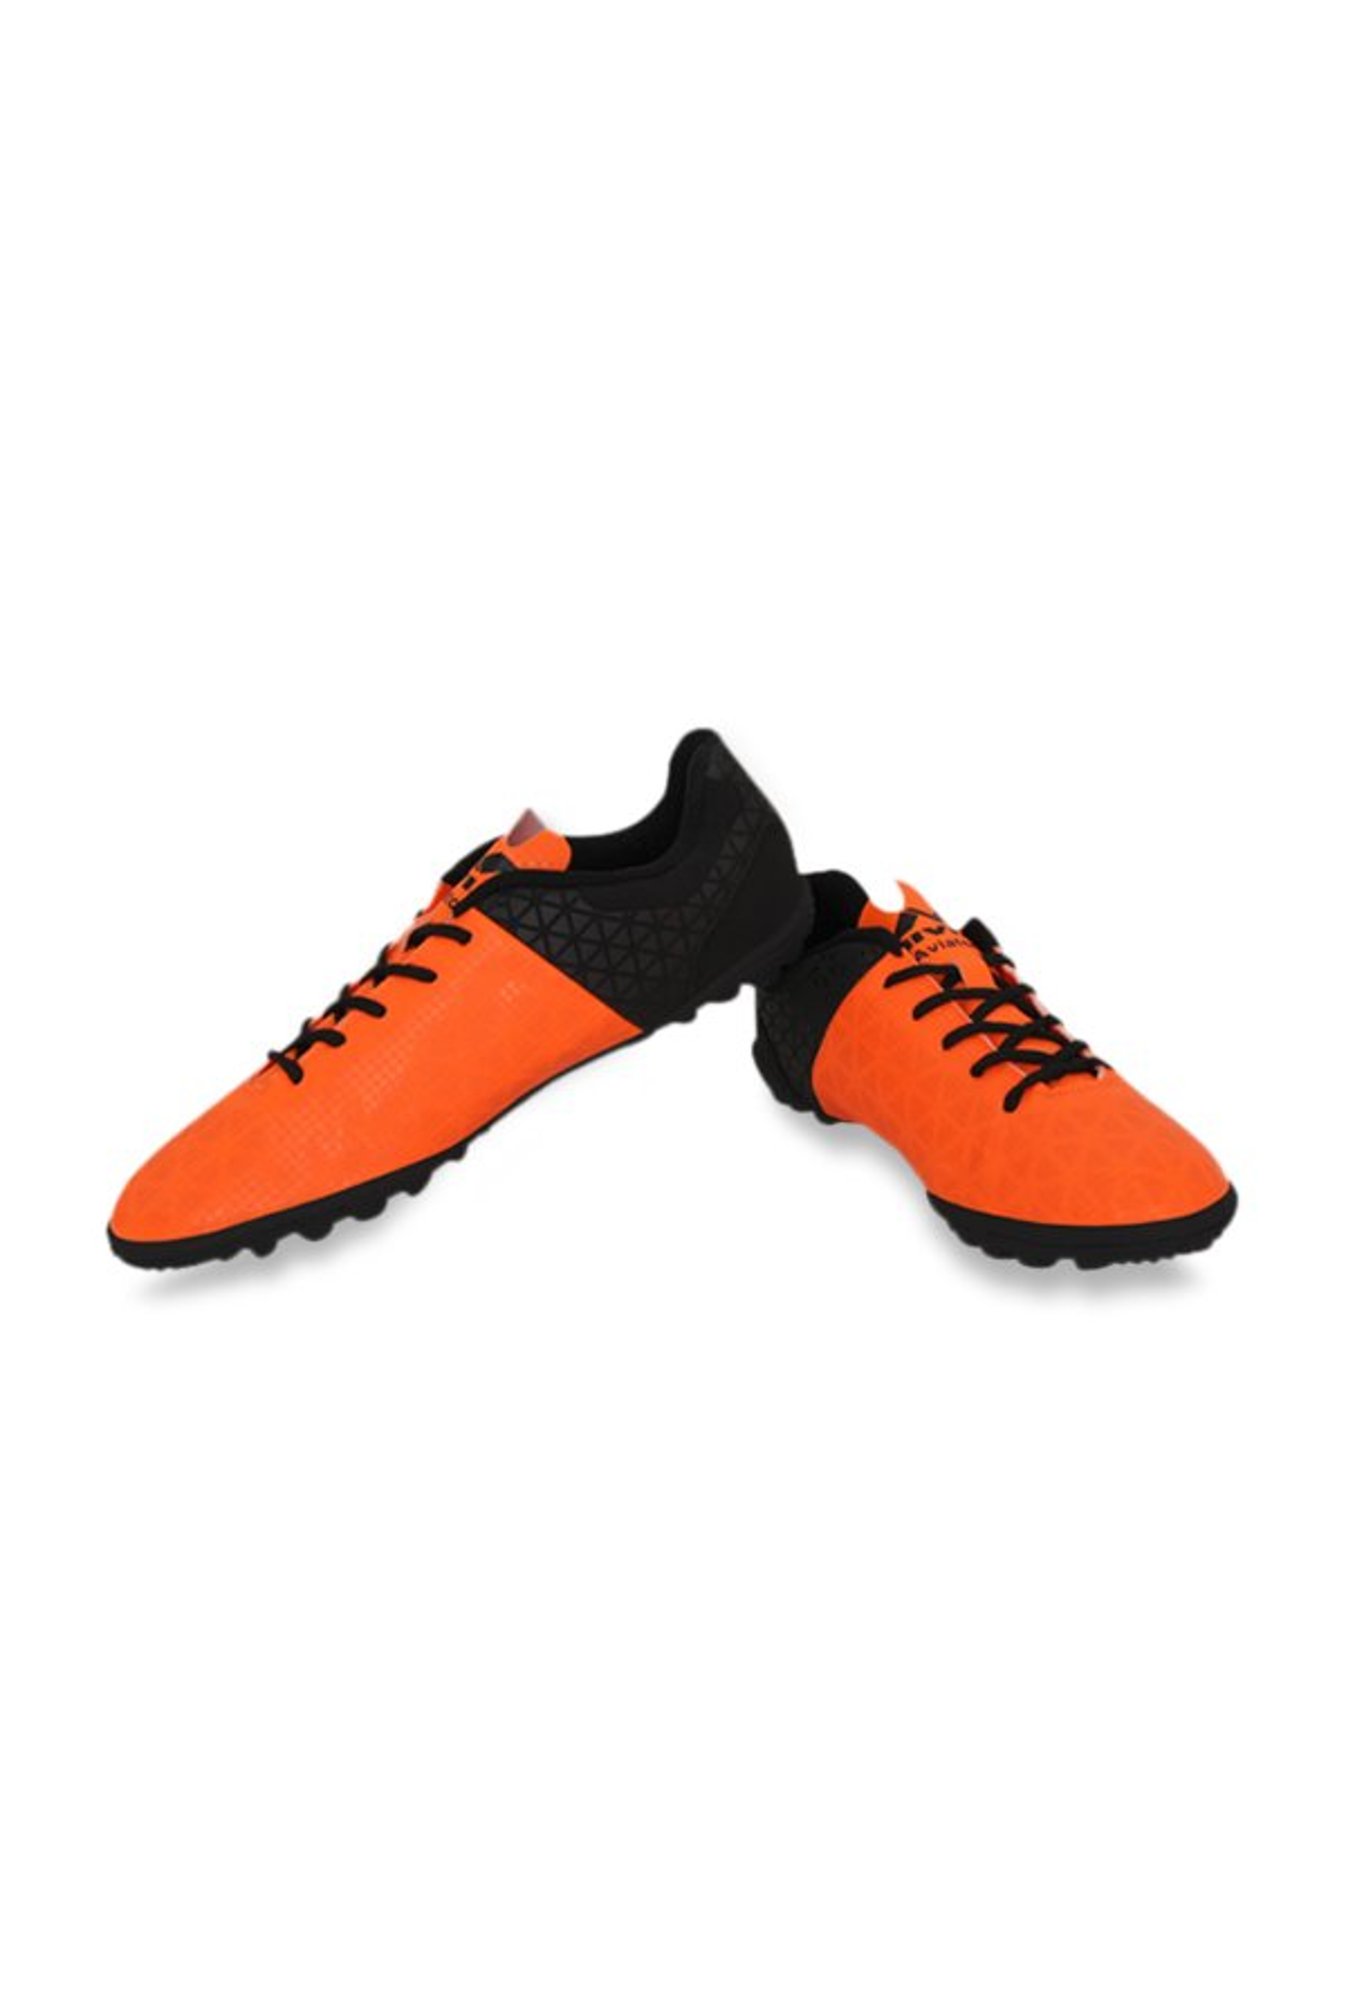 nivia aviator football shoes black orange